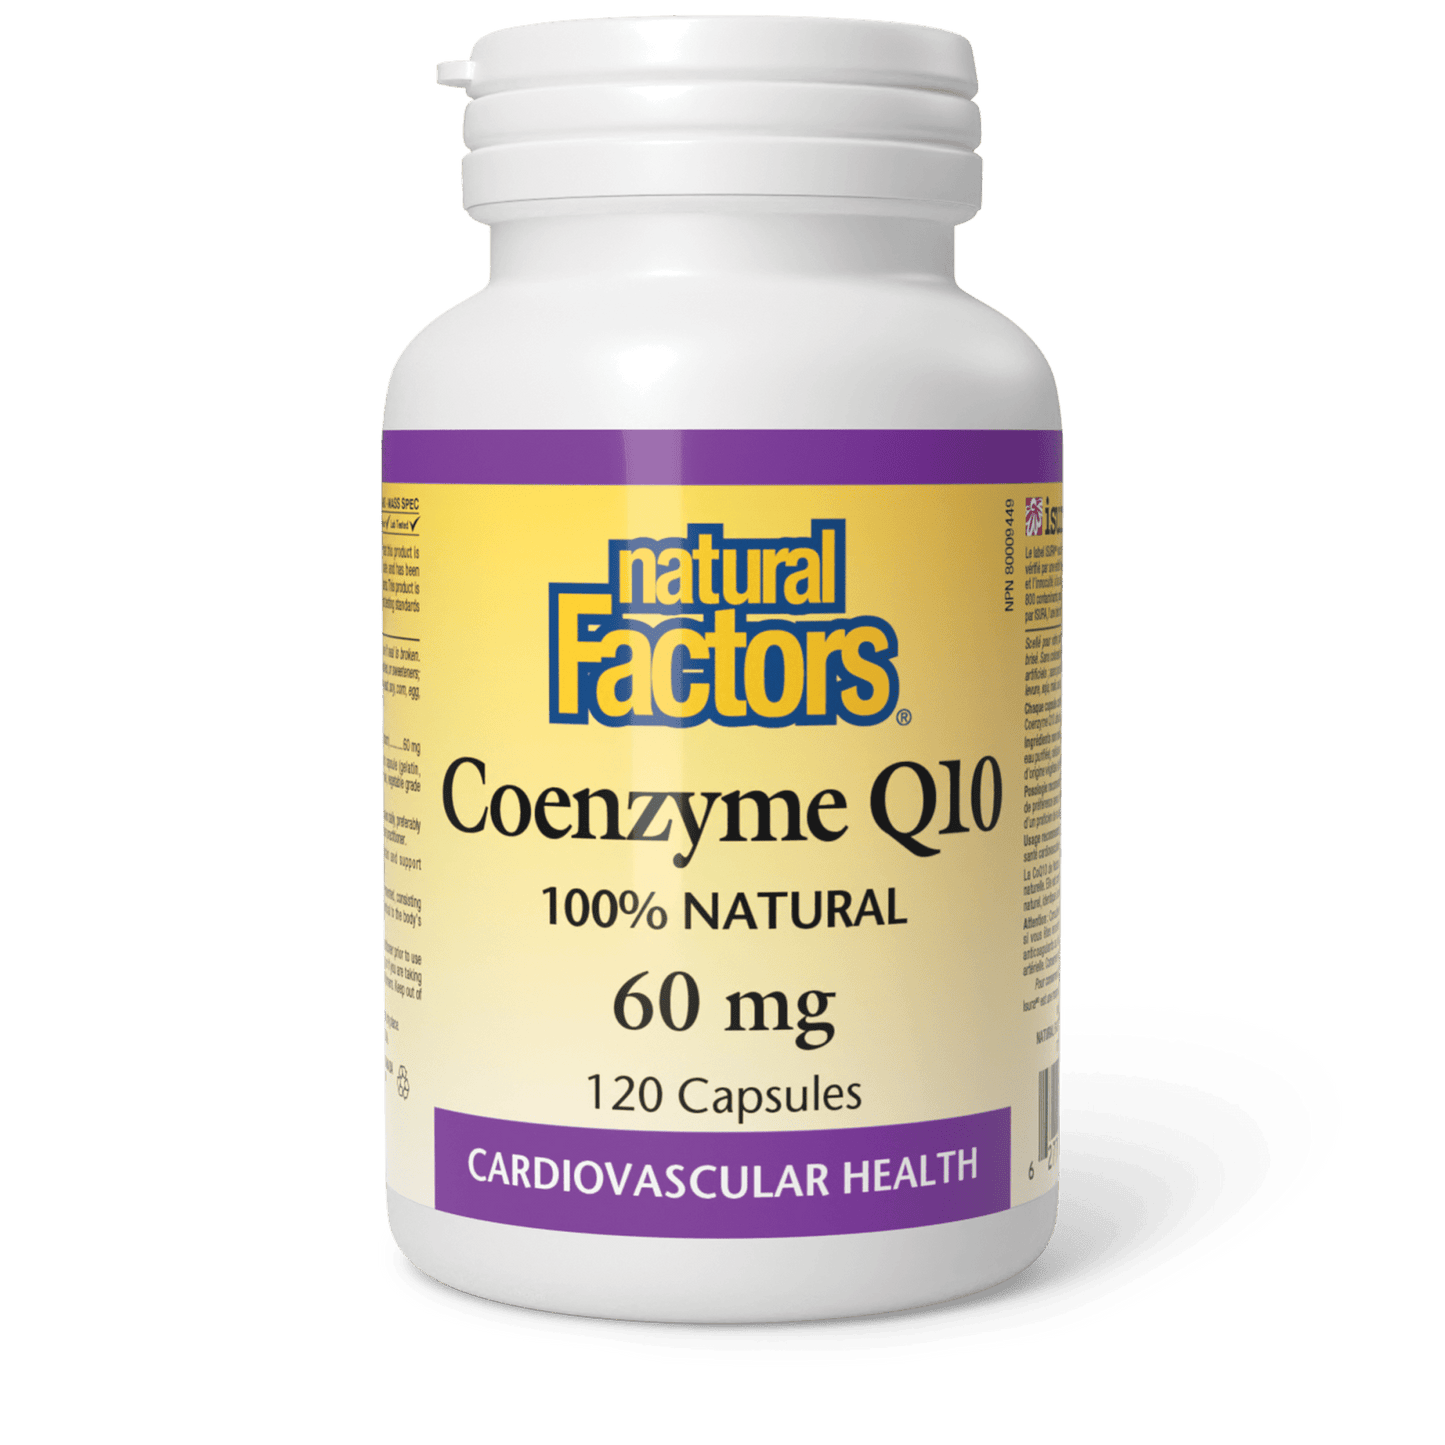 Coenzyme Q10 60 mg, Natural Factors|v|image|2079